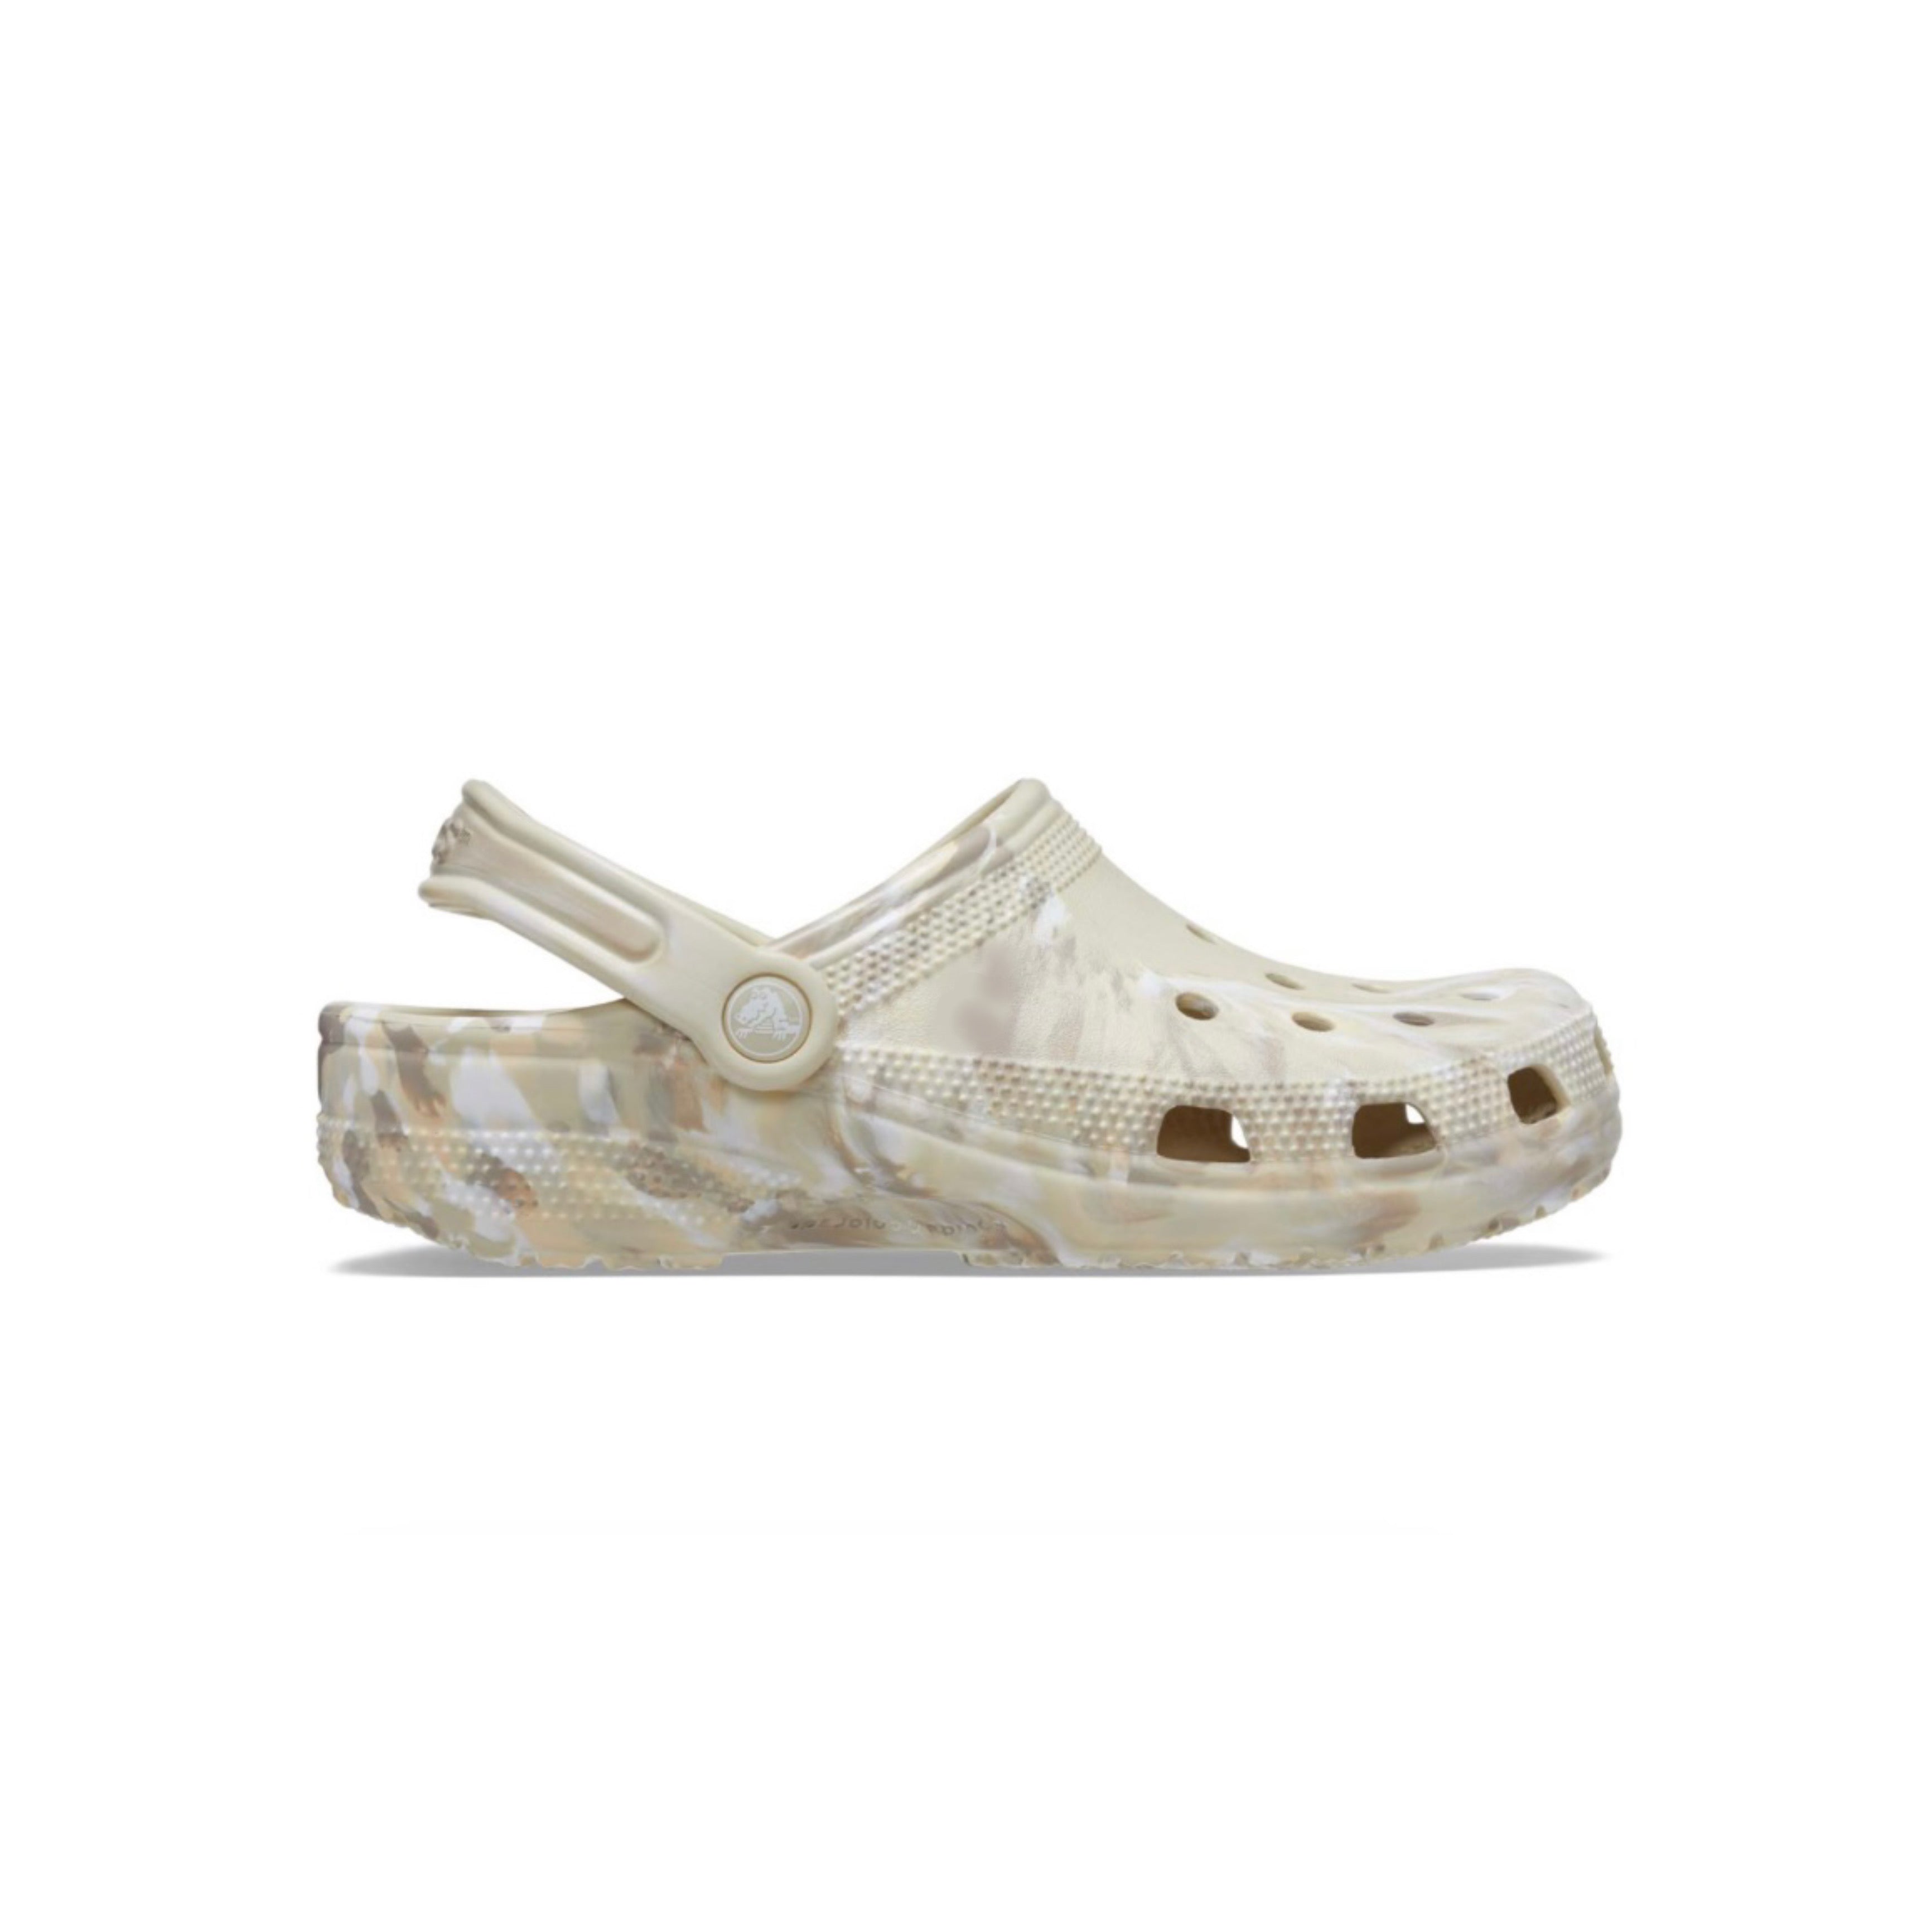 Marble beige crocs